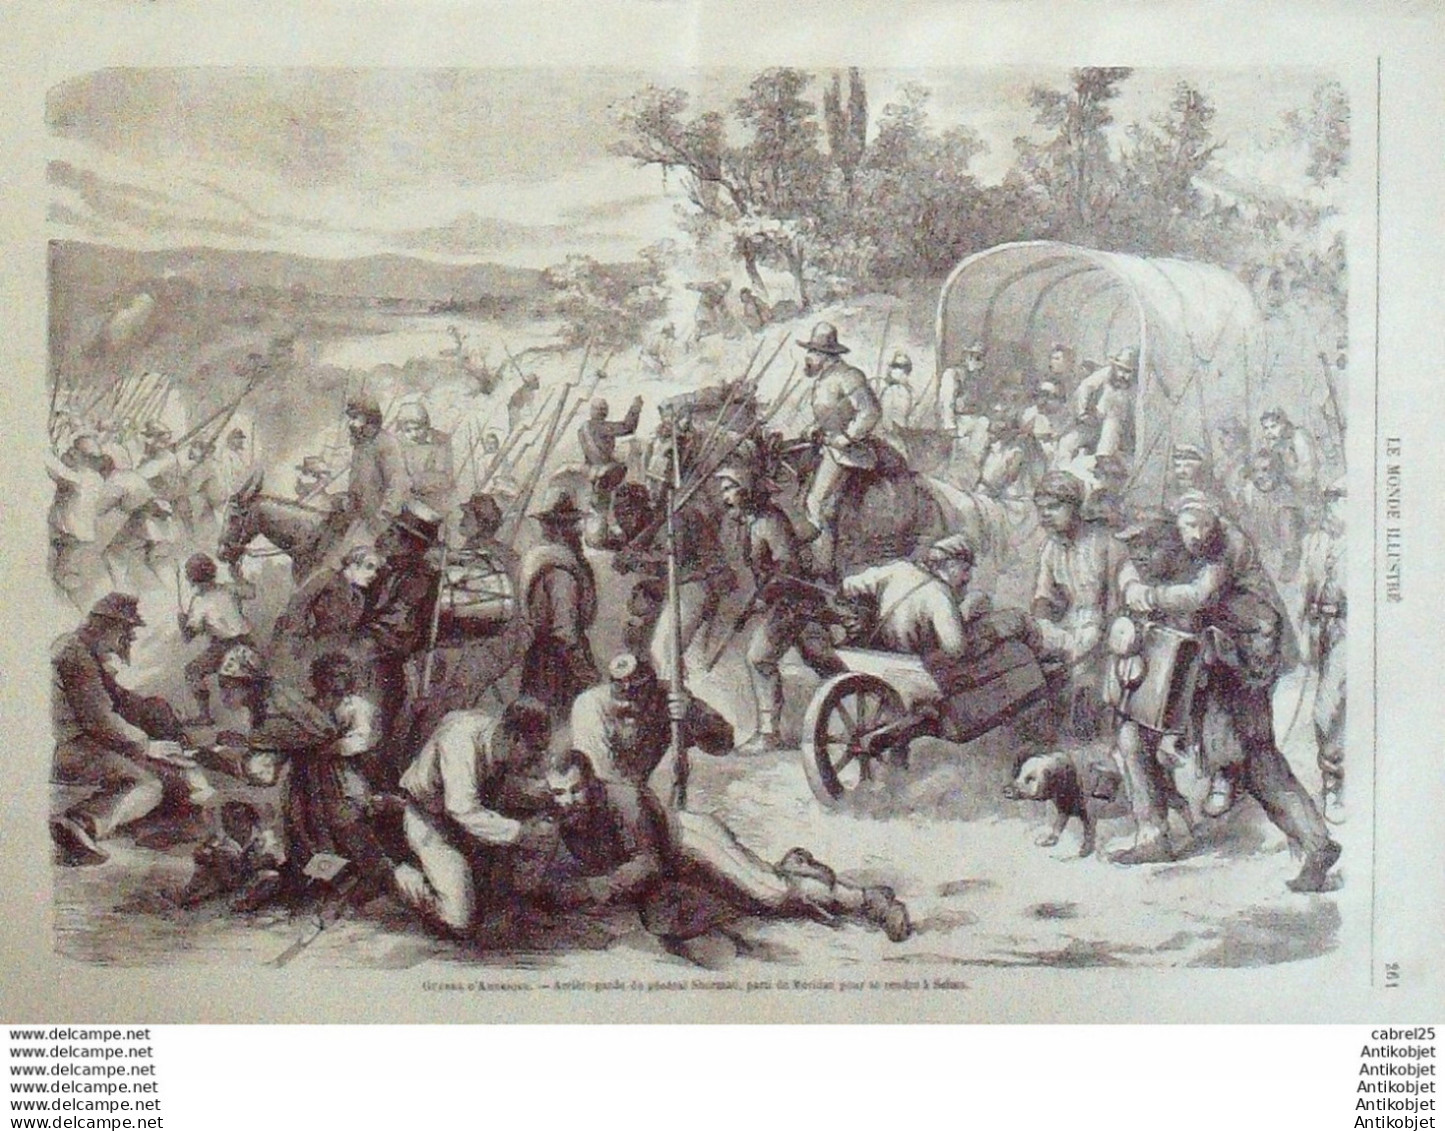 Le Monde Illustré 1864 N°367 Danemark Sundeved Duppel Italie Trieste Alabama Selma - 1850 - 1899